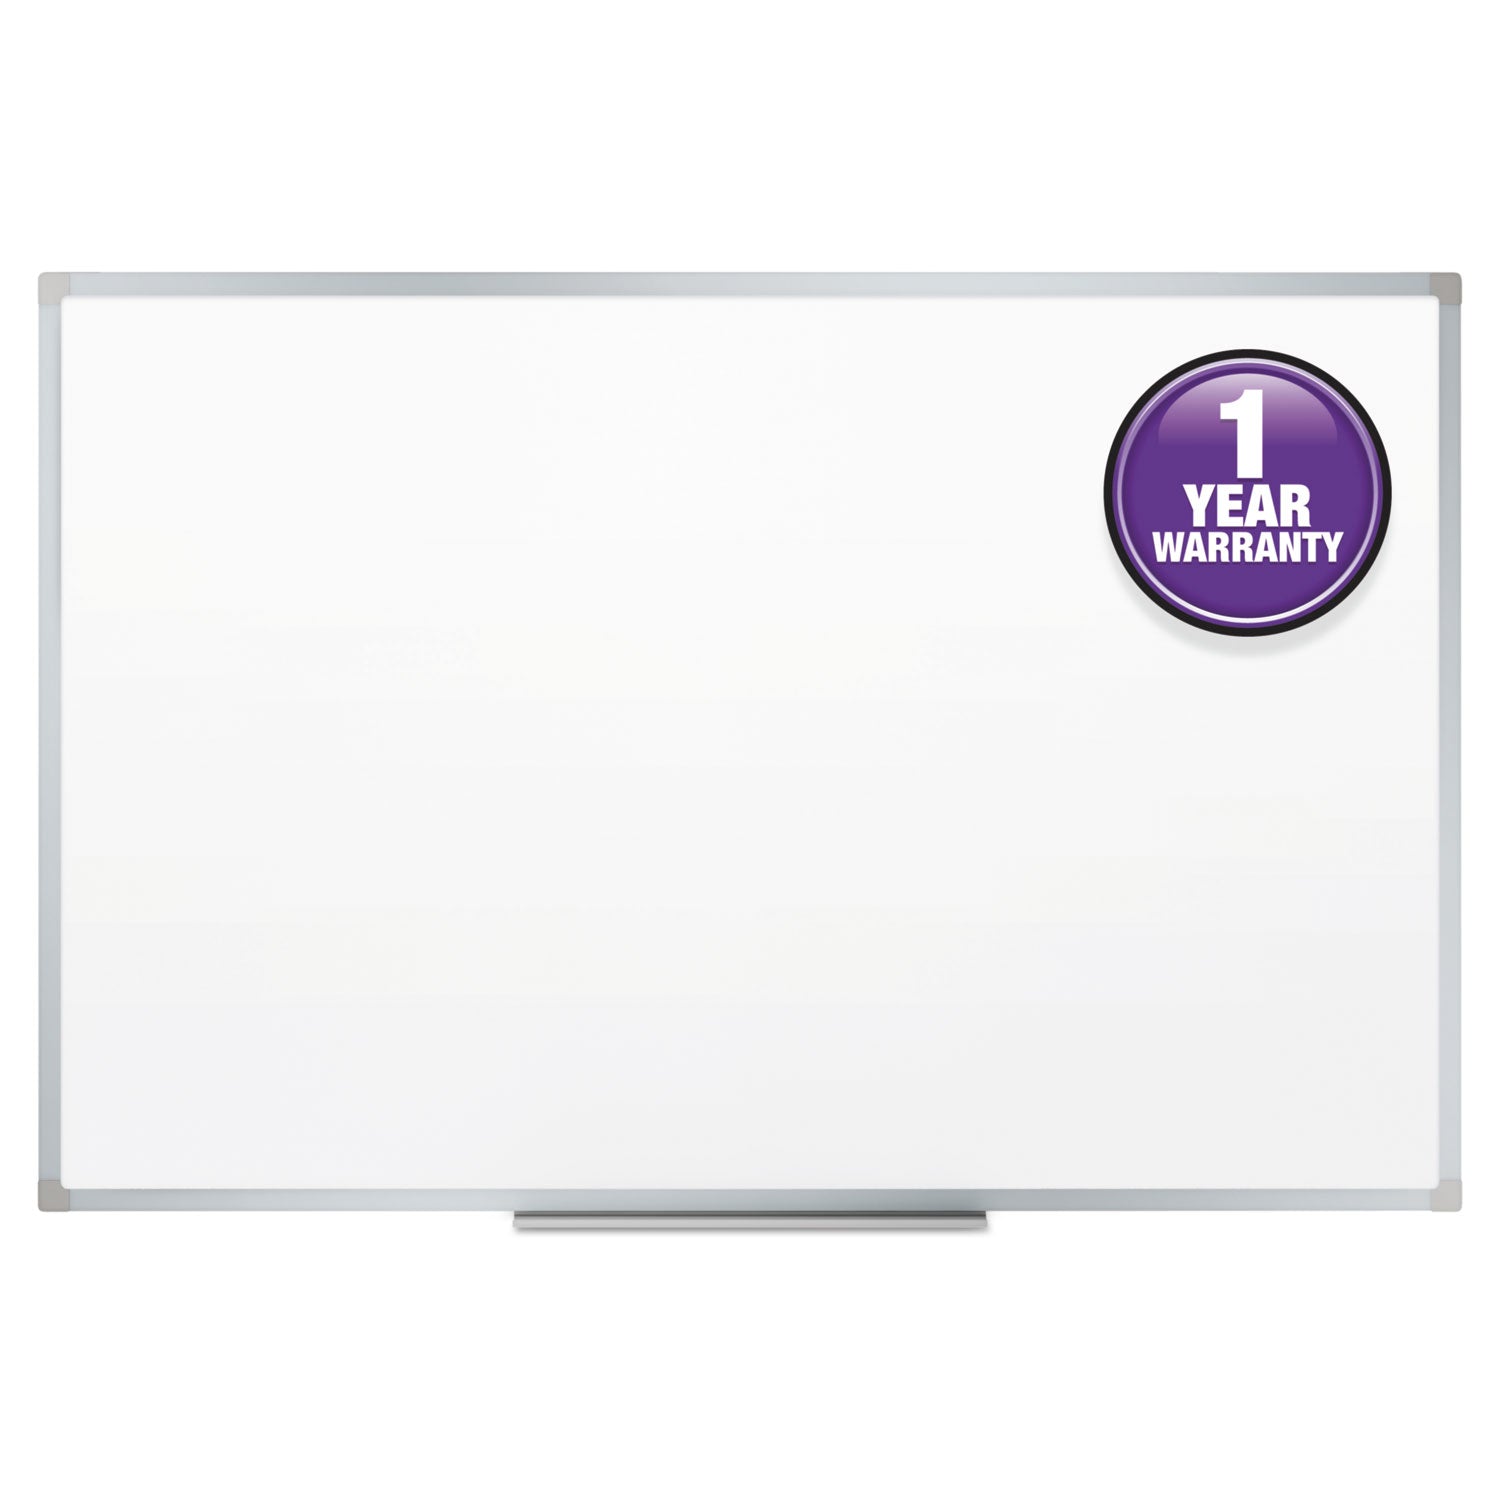 Dry Erase Board with Aluminum Frame, 36 x 24, Melamine White Surface, Silver Aluminum Frame - 